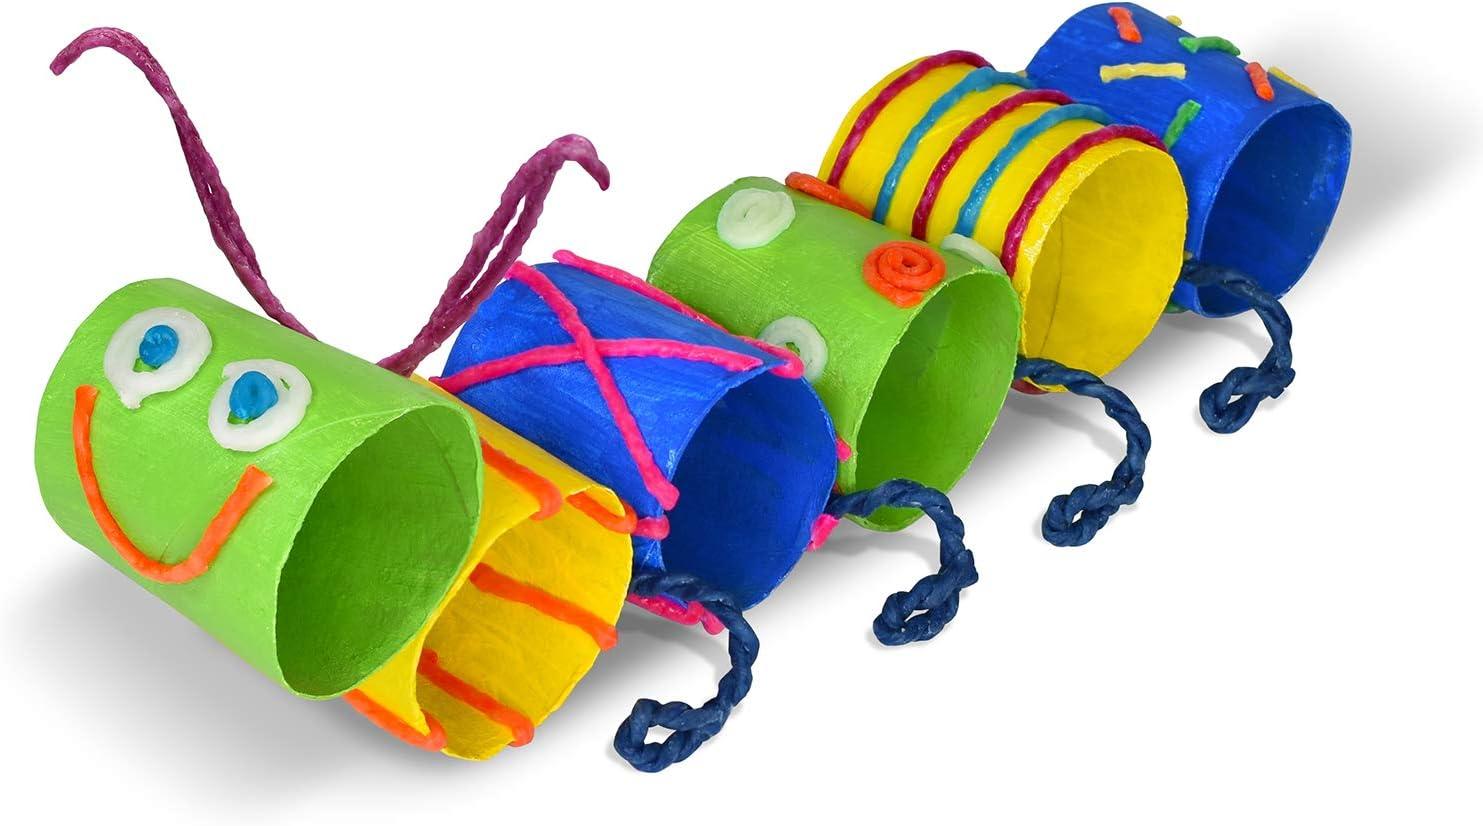 Washable Kids Paint, 6 Metallic Colors - Cheeky Monkey Toys